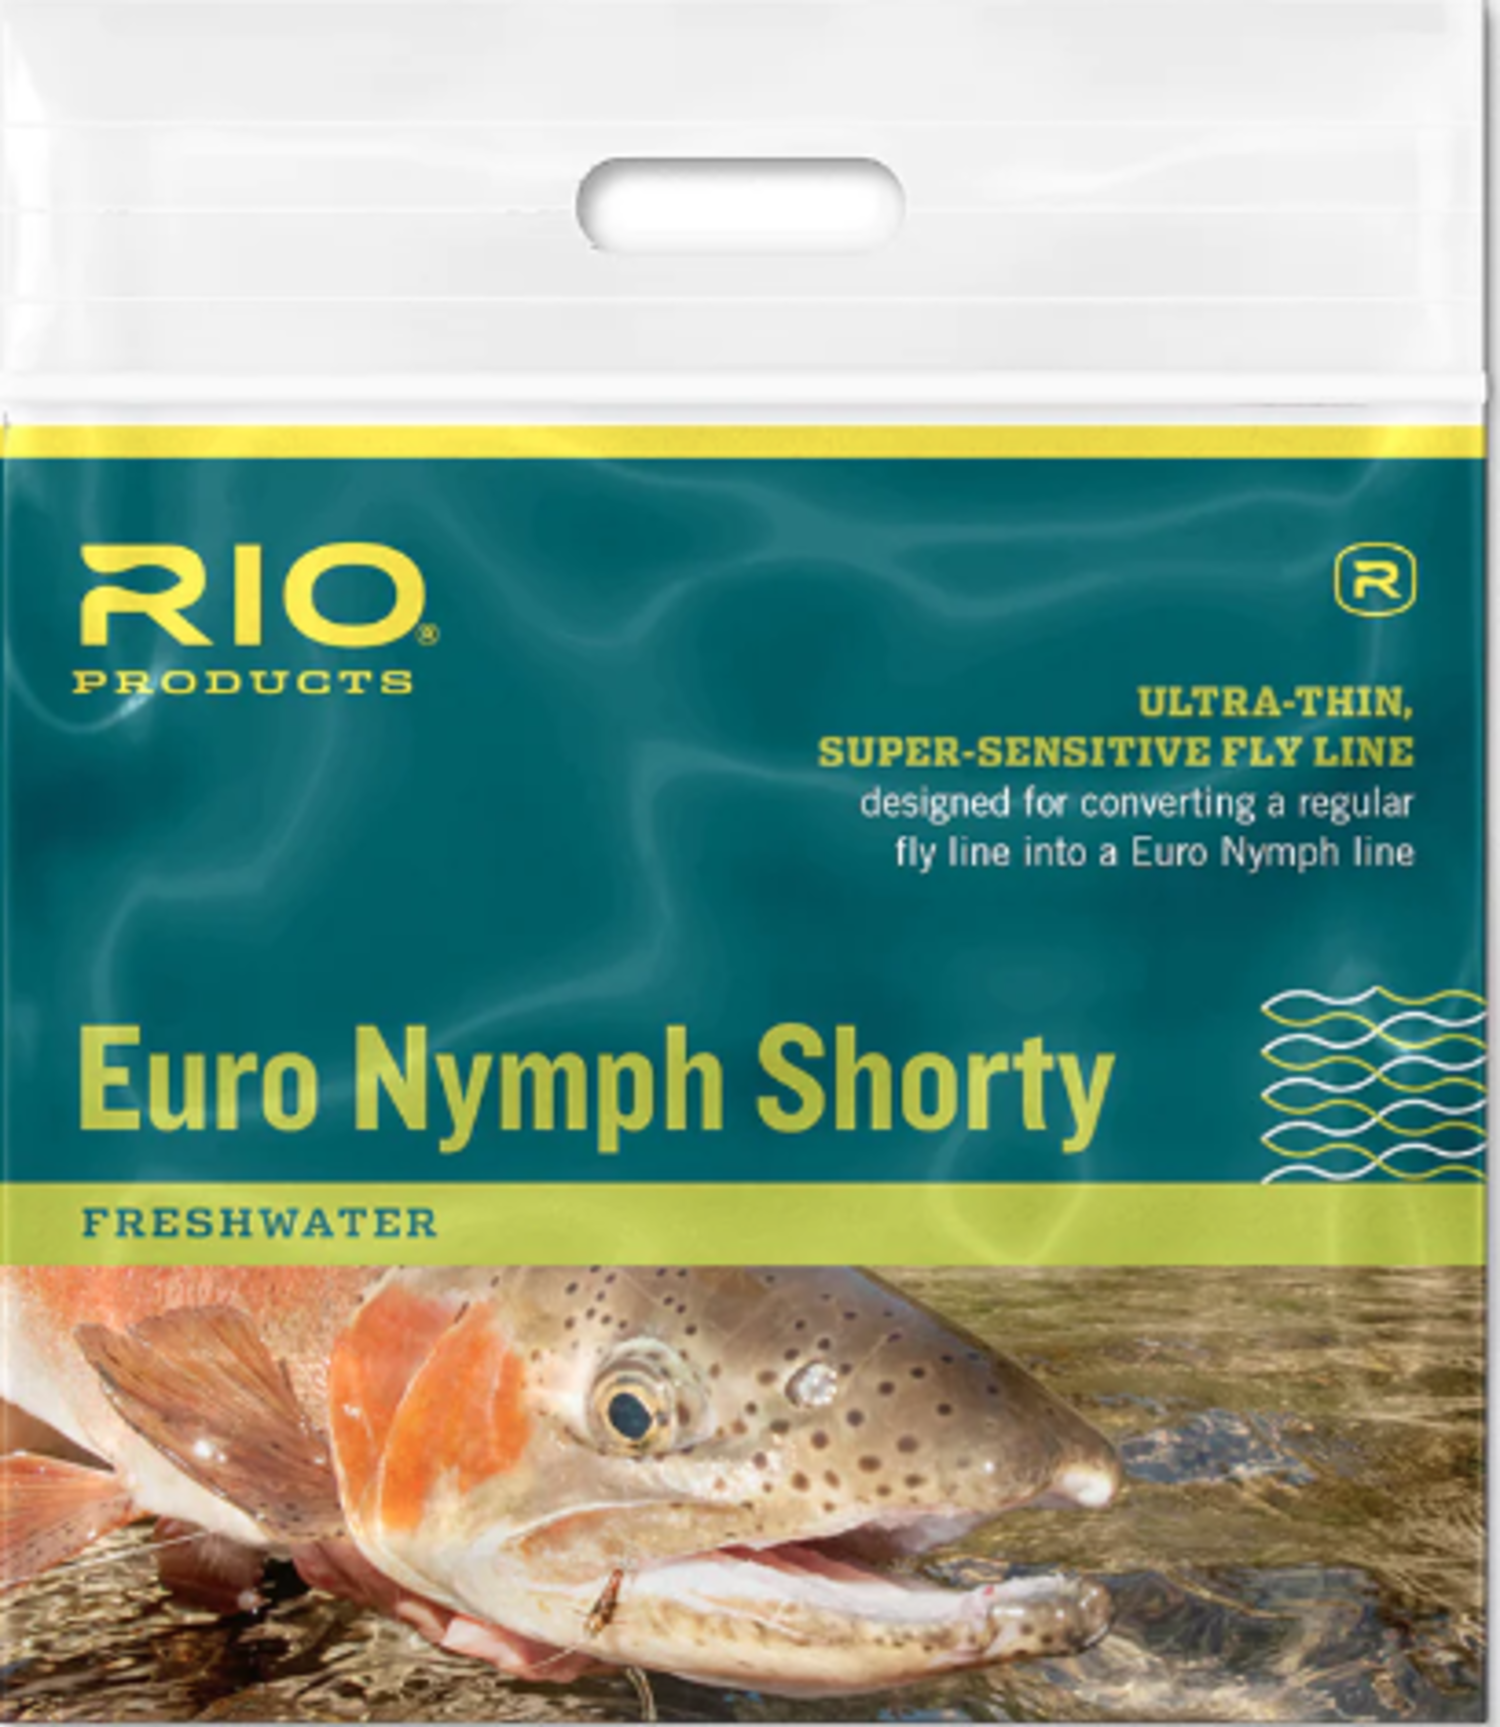 EURO NYMPH SHORTY - The Fish Hawk